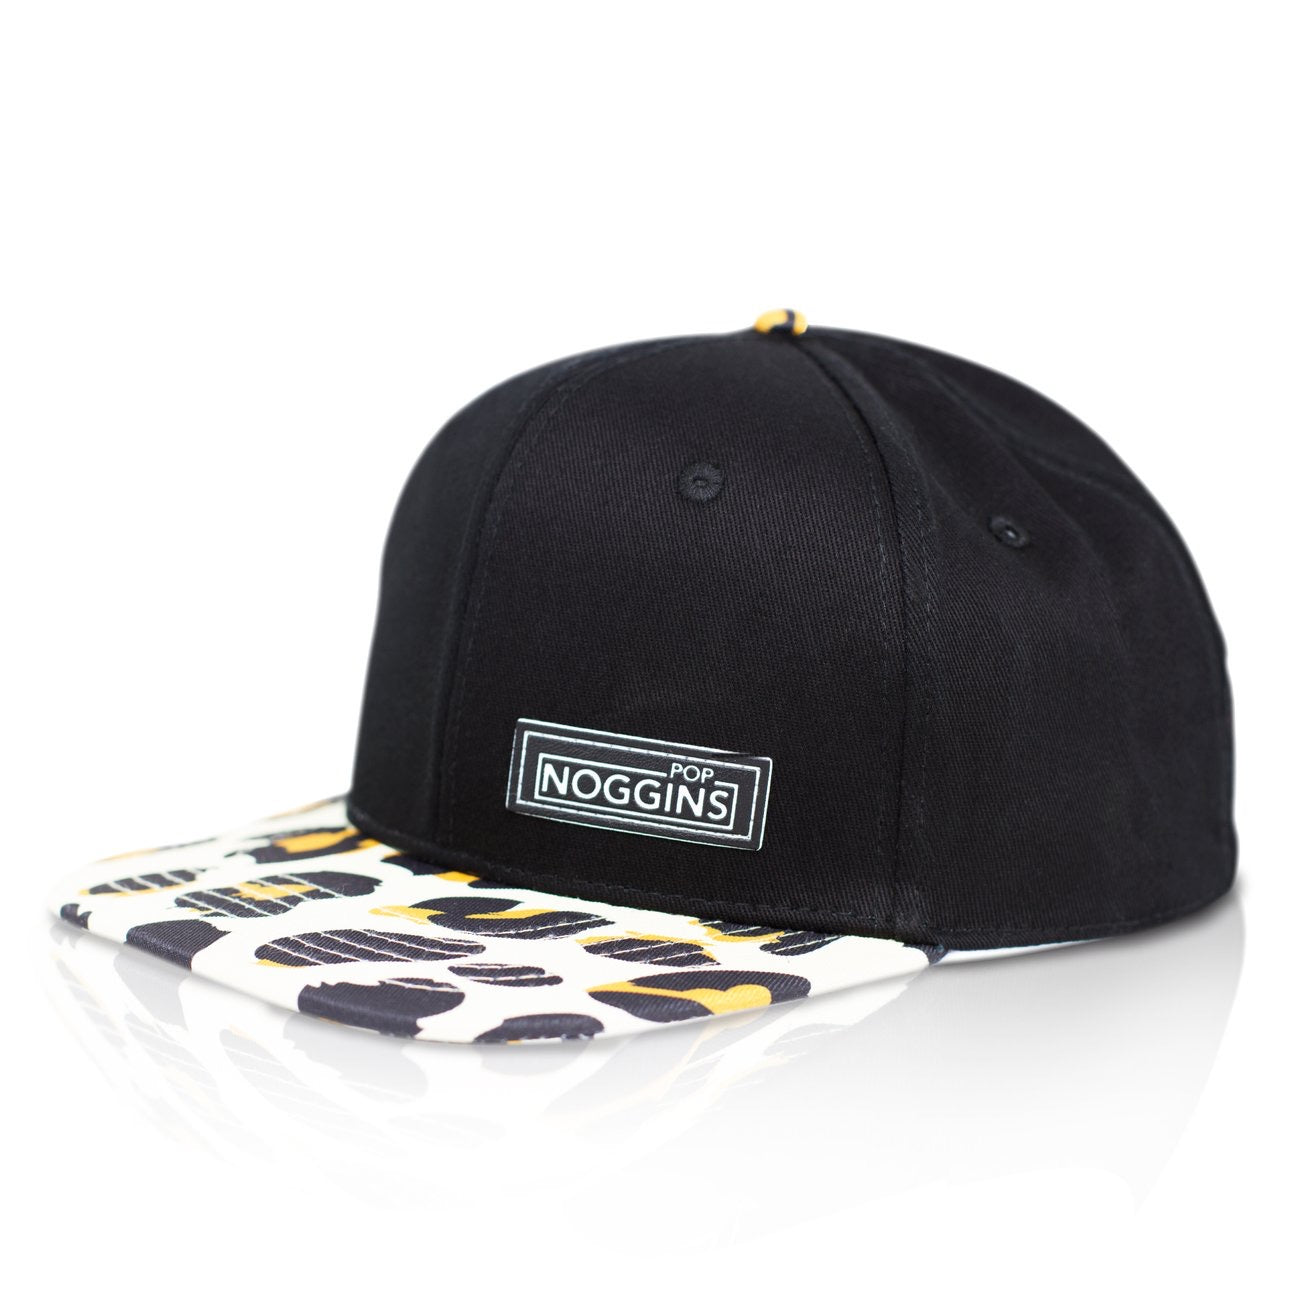 Roar SnapBack Hat - Knogins the brand - nixonscloset